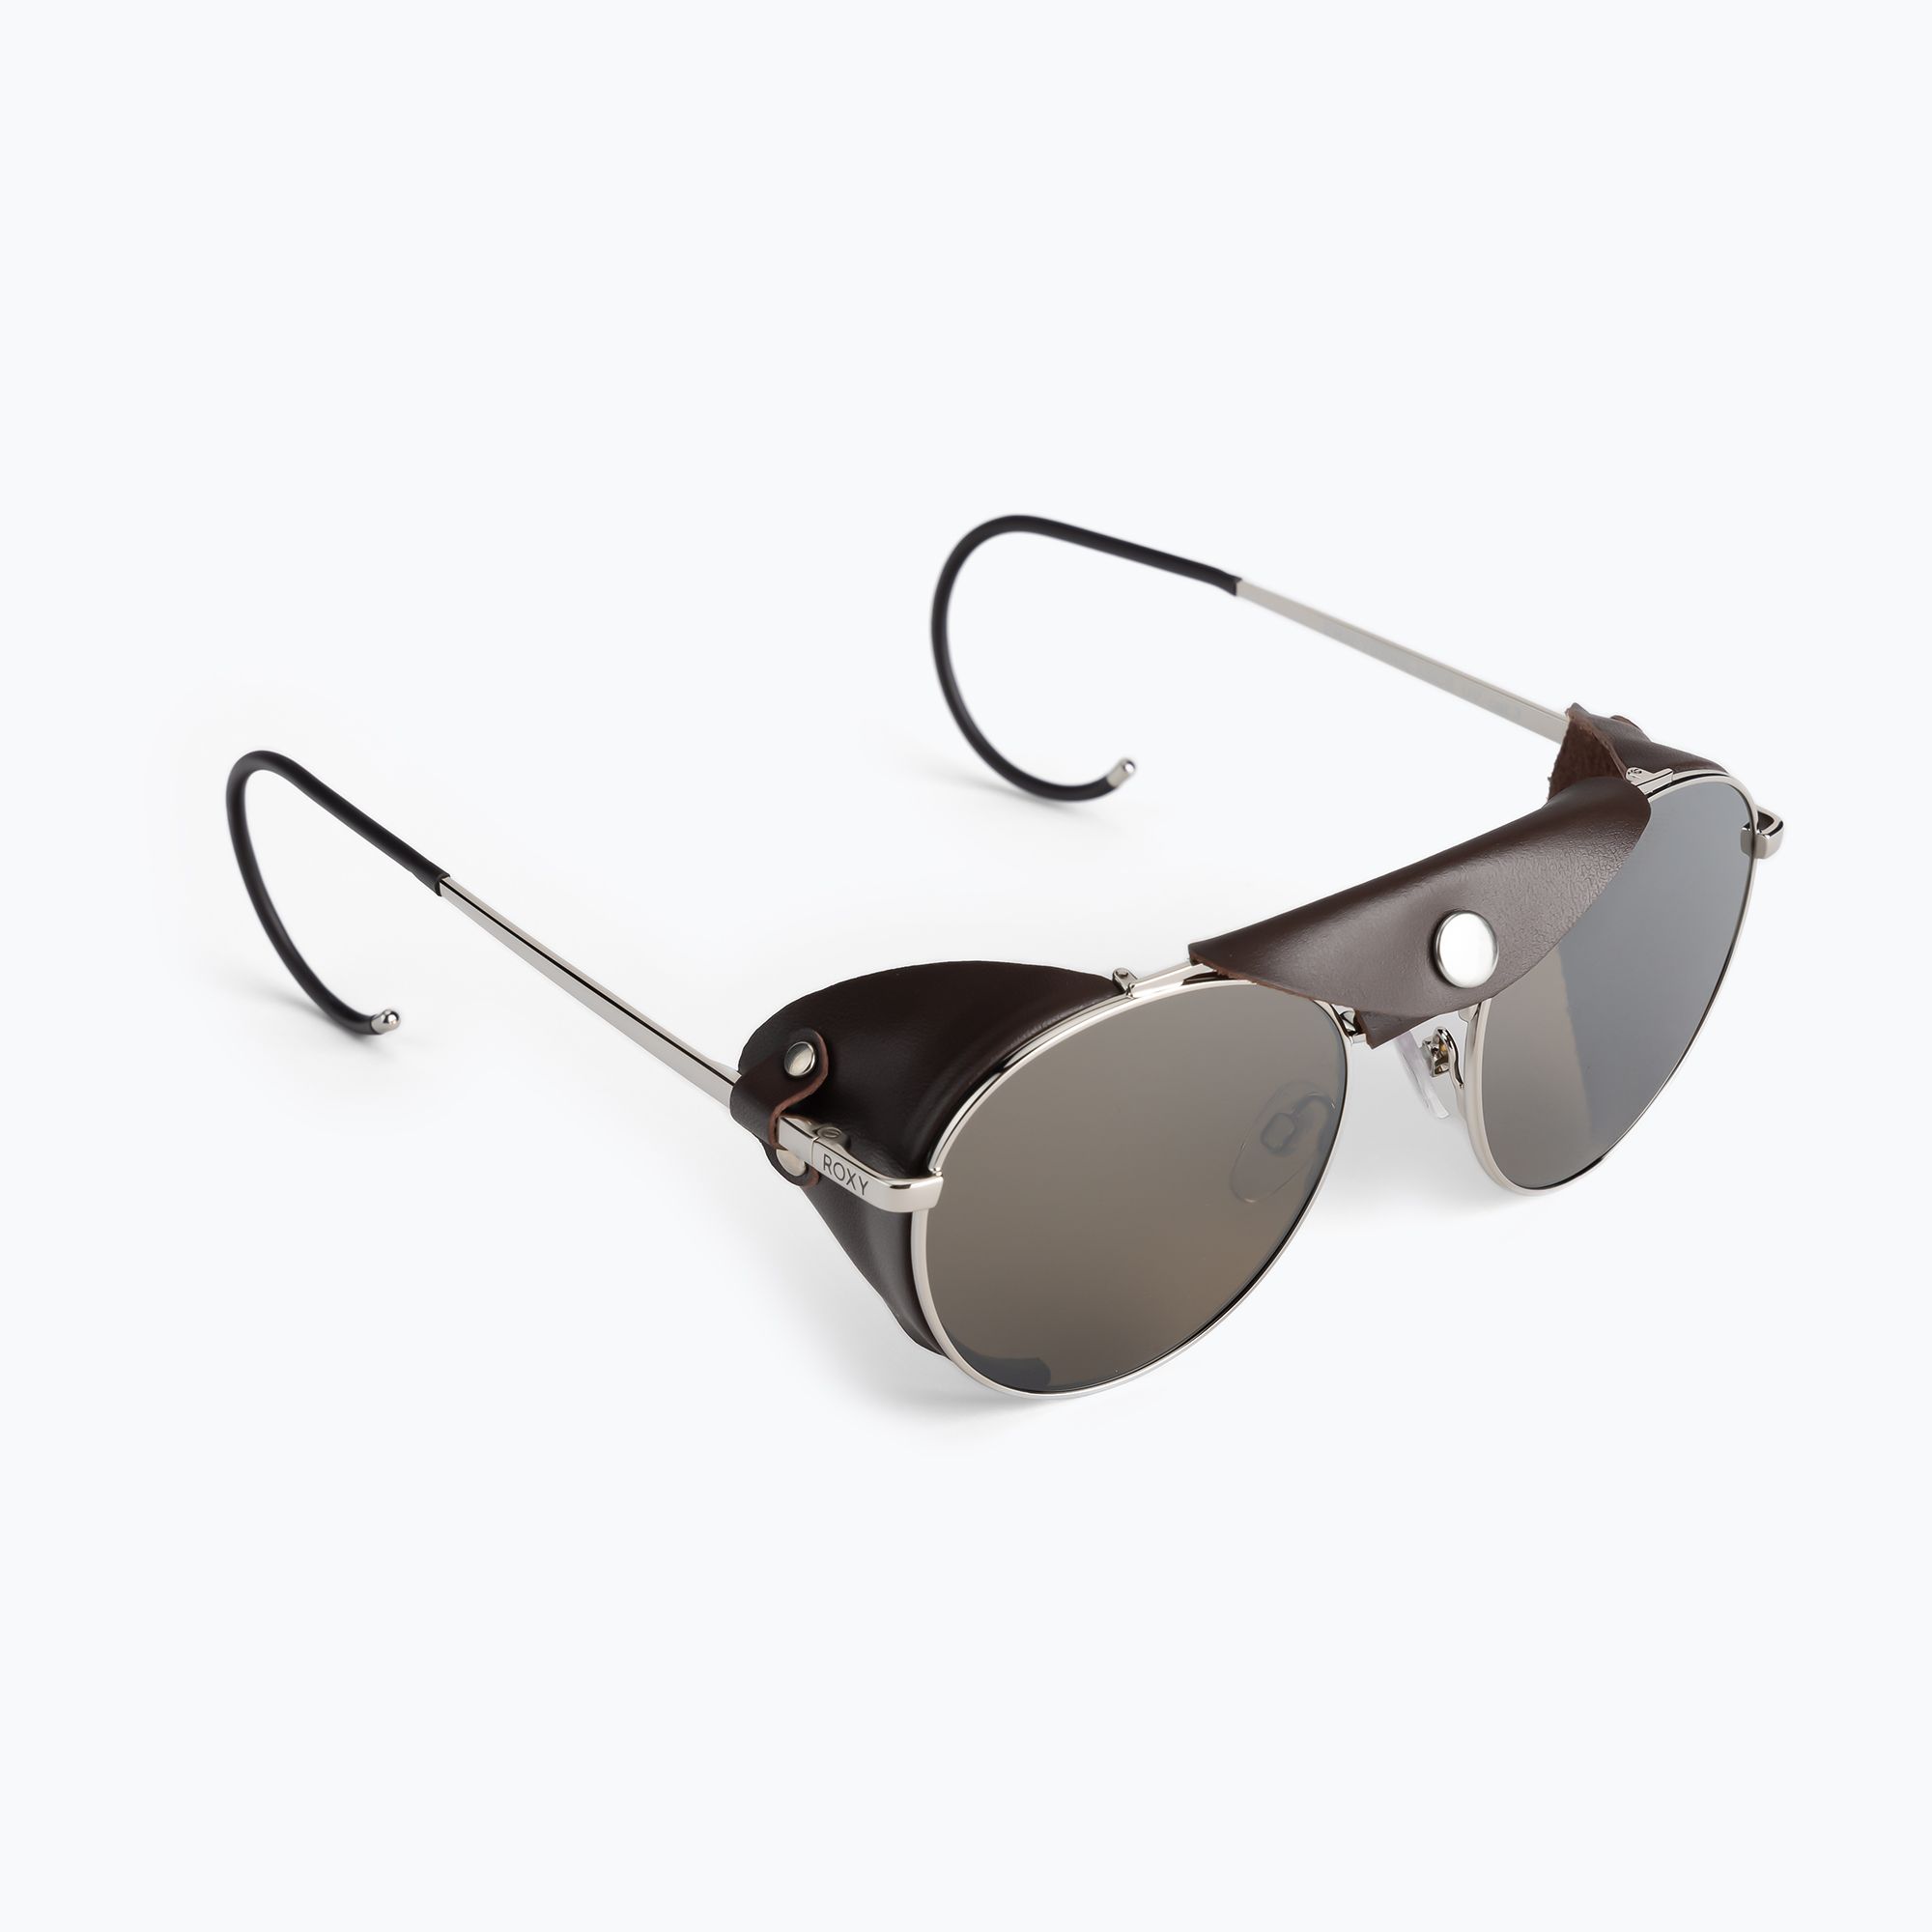 sunglasses ROXY 2021 silver/brown Women\'s Blizzard shiny leather